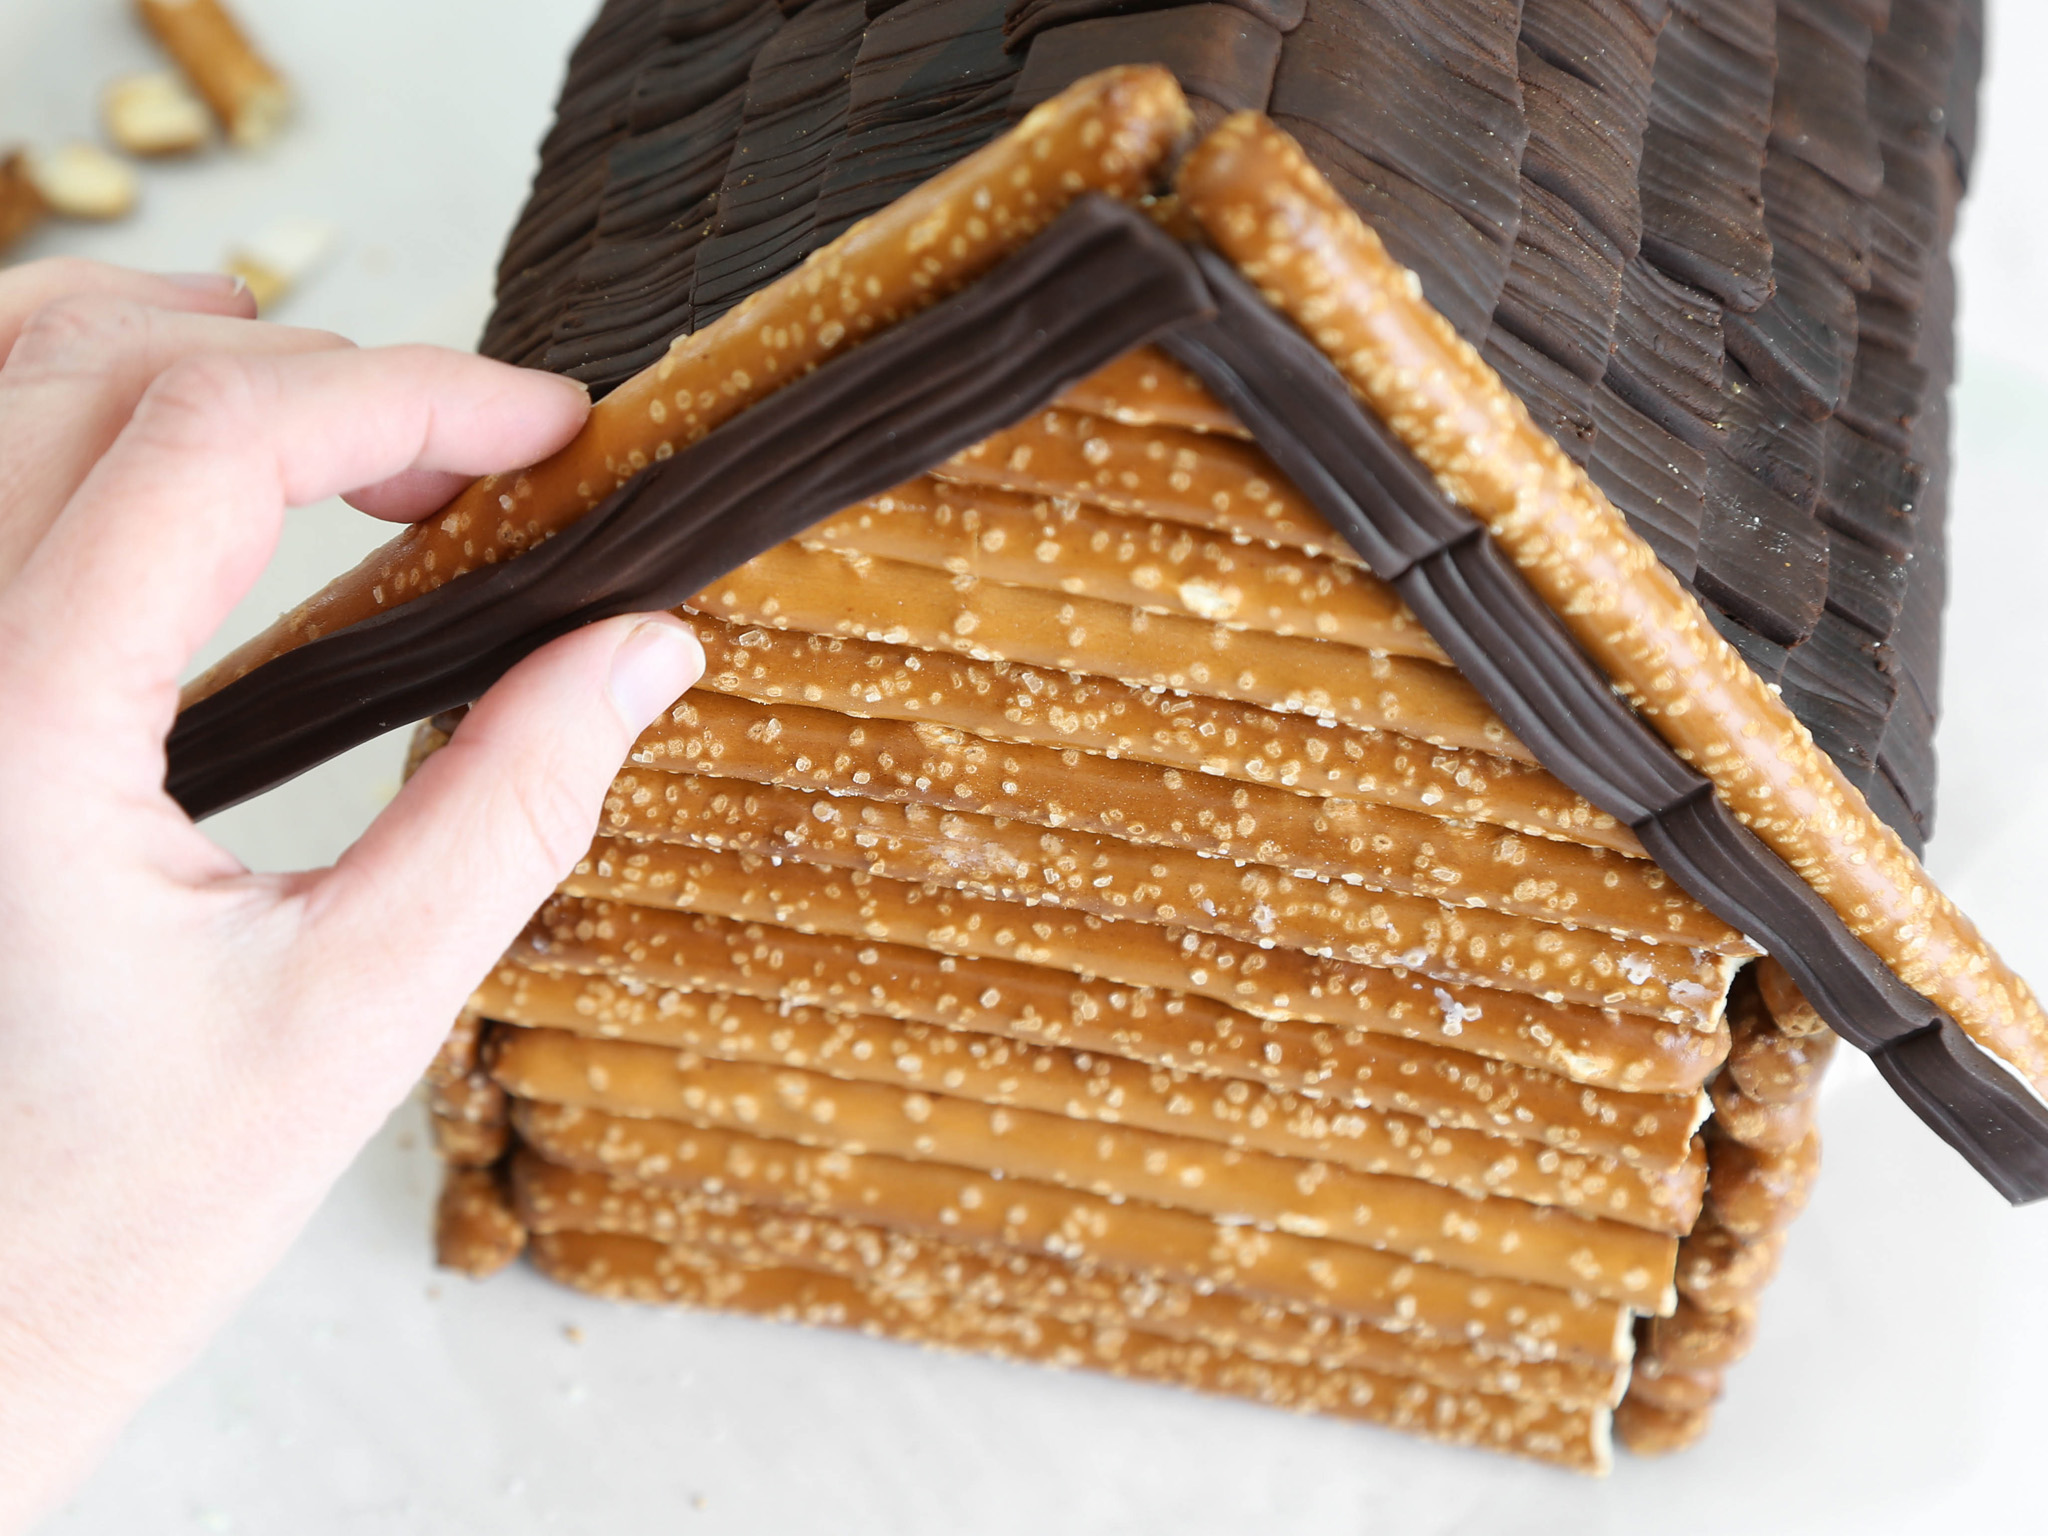 hgtv log cabin gingerbread house template